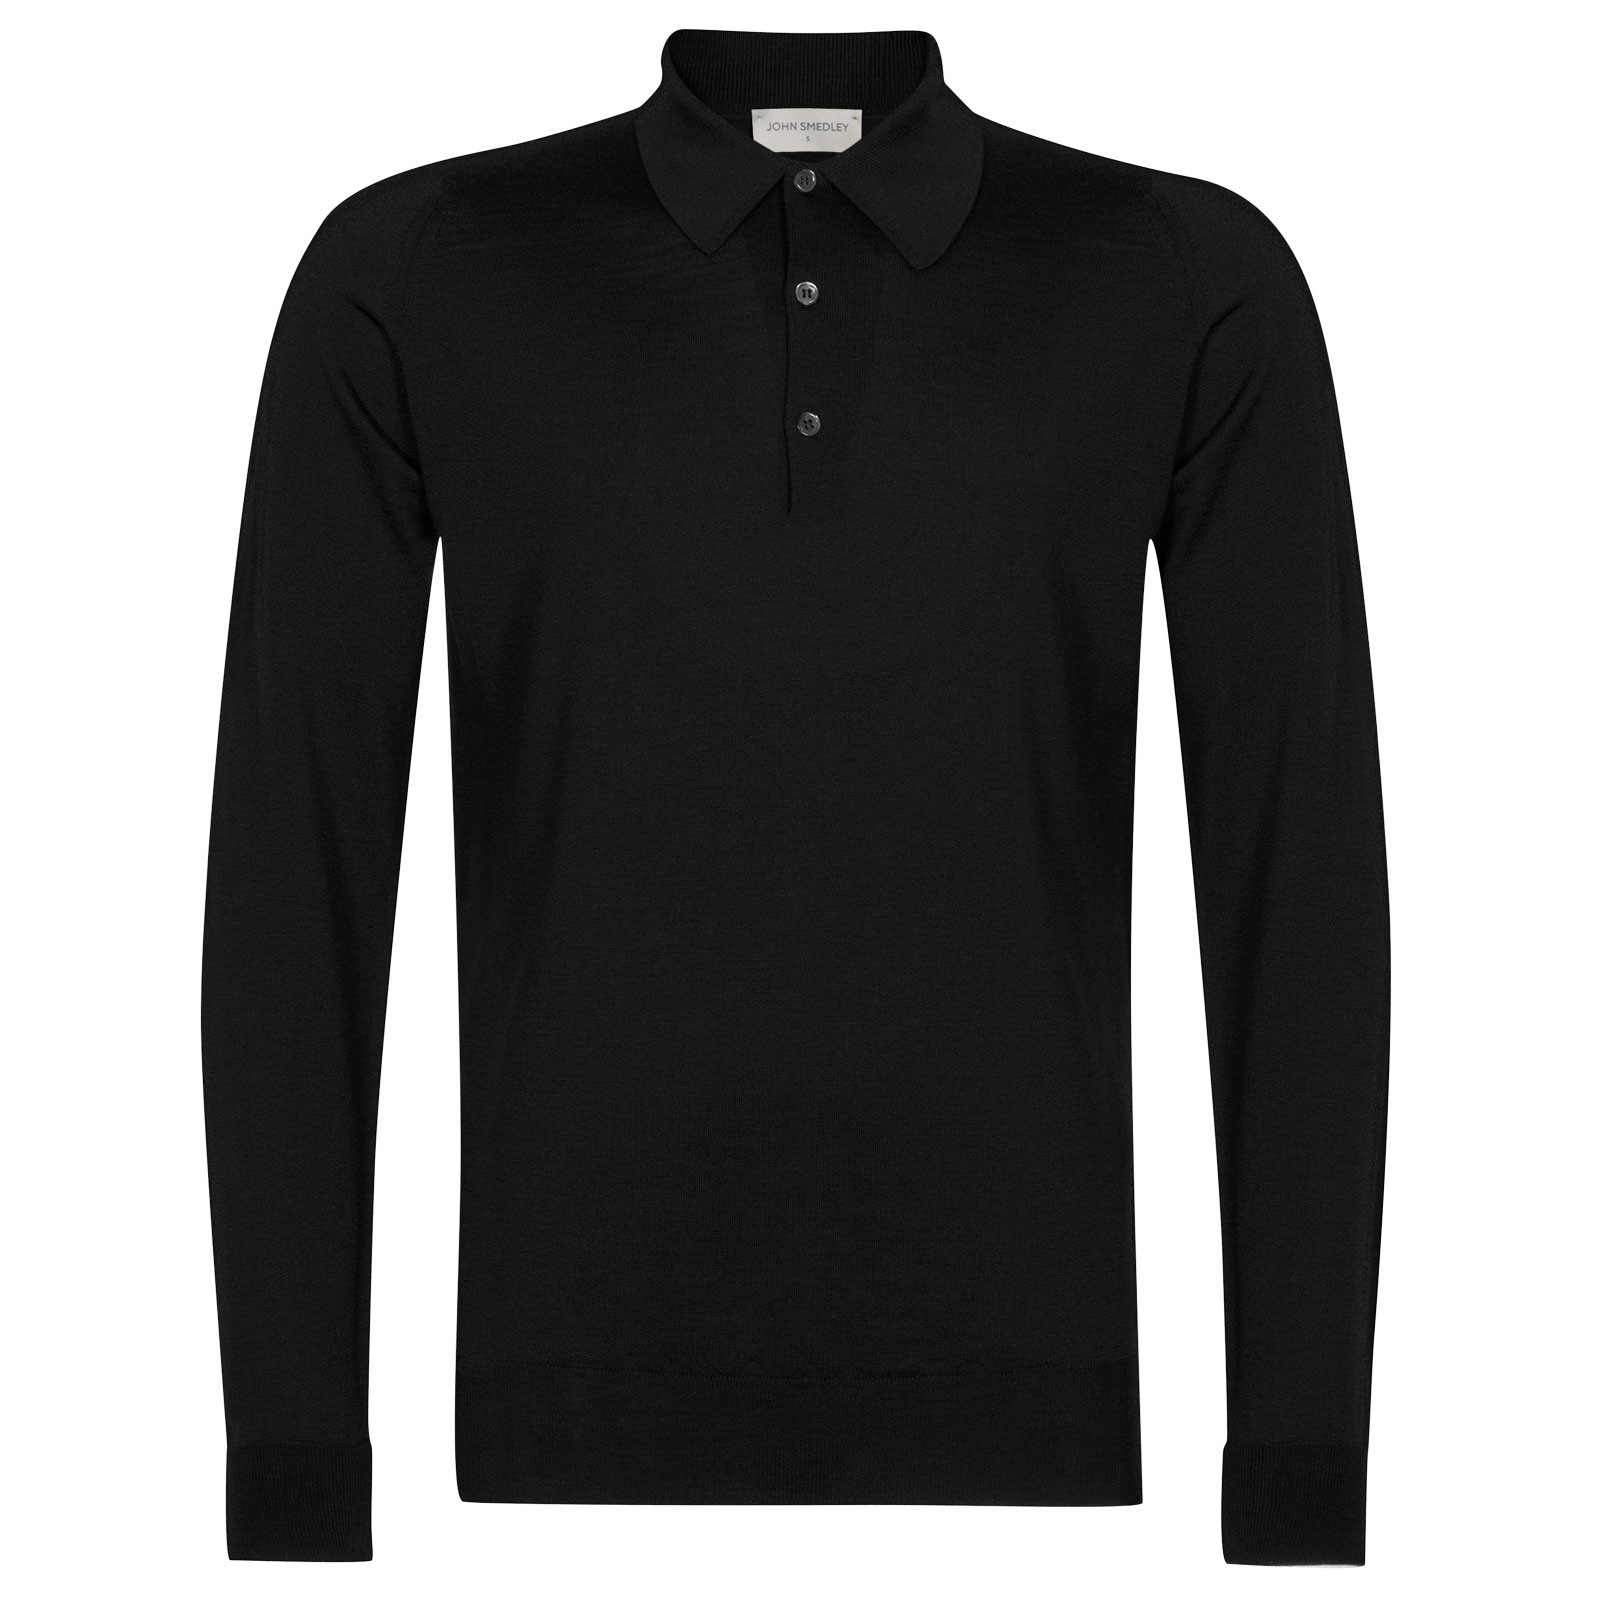 John Smedley Dorset Polo Shirt Long Sleeve Black Merino Wool - Quality Shop